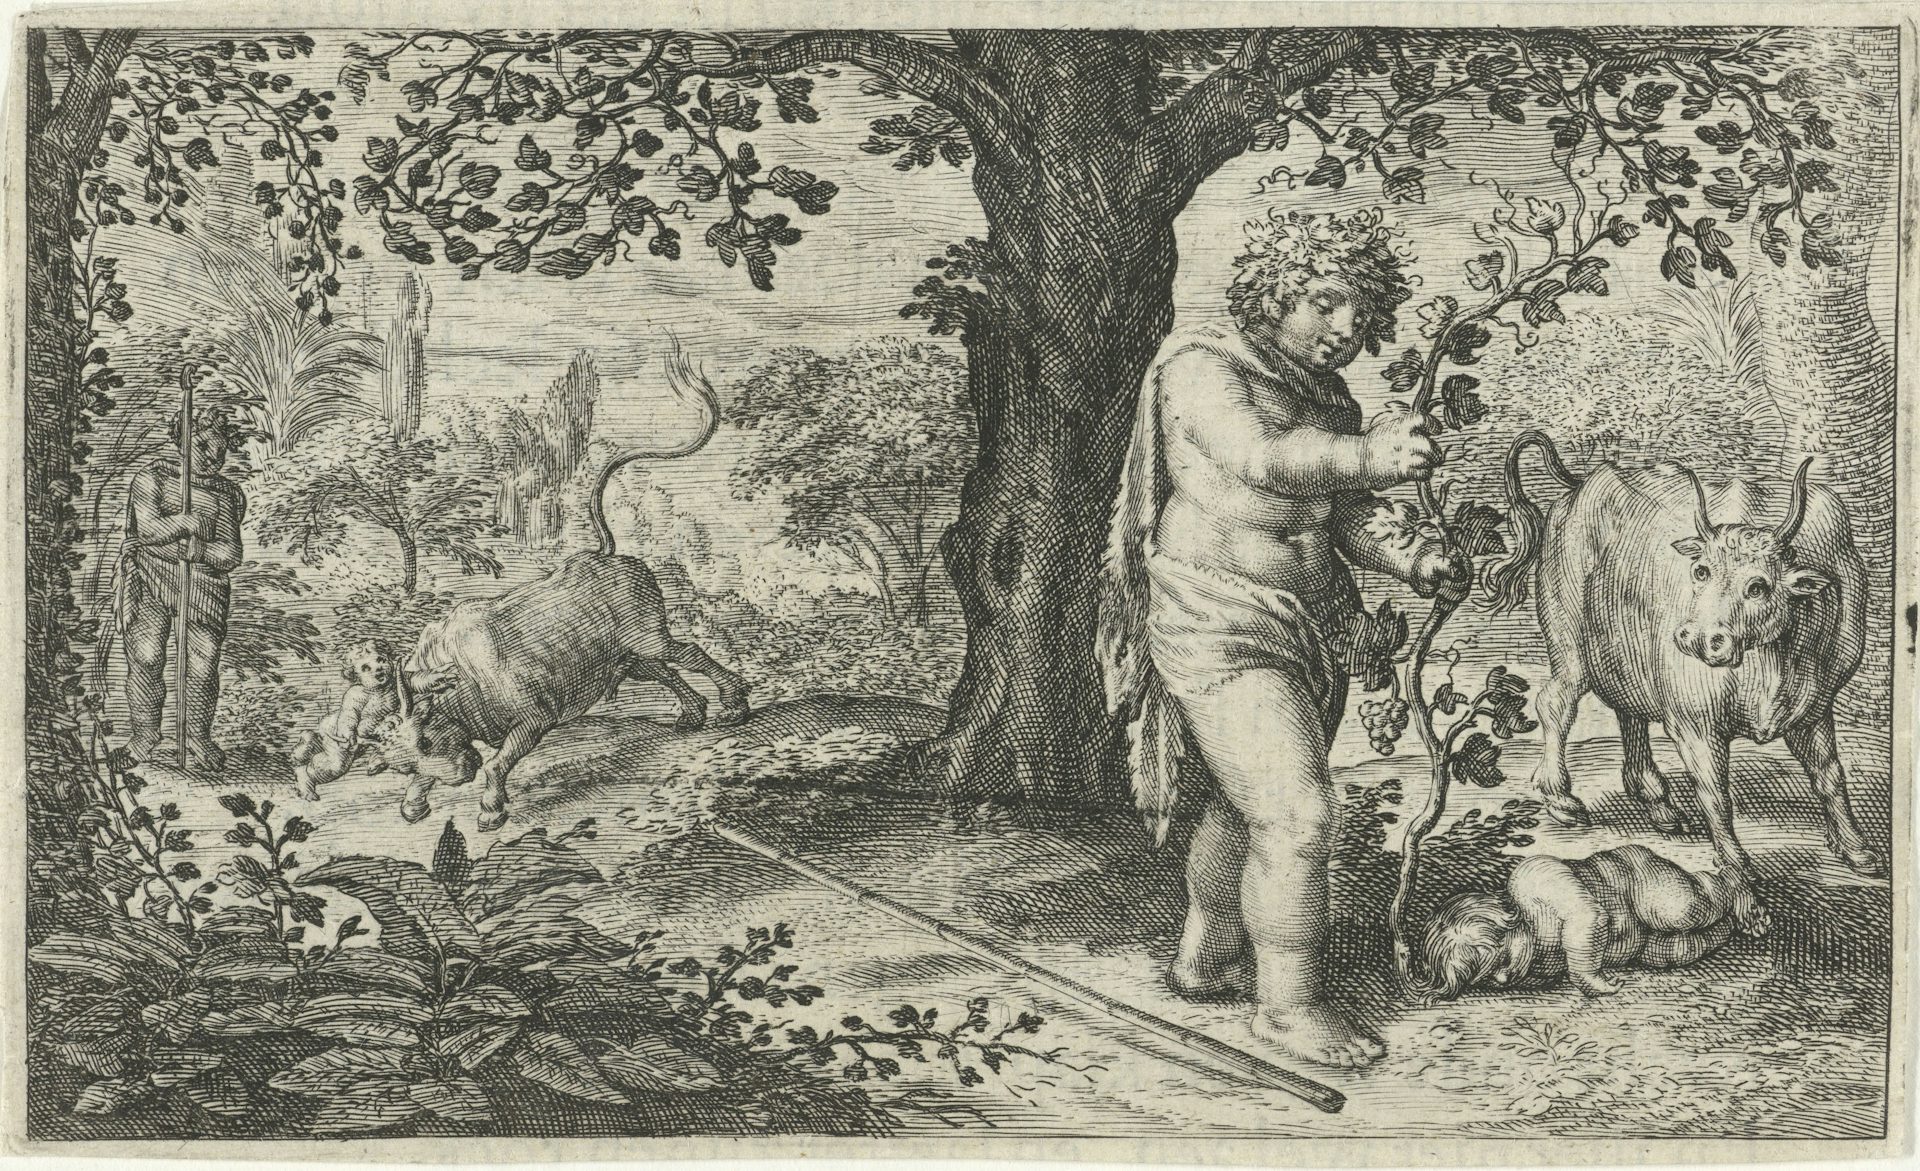 Bacchus and Ampelus by Jacob Matham after David Vinckboons, 1616, Rijksmuseum